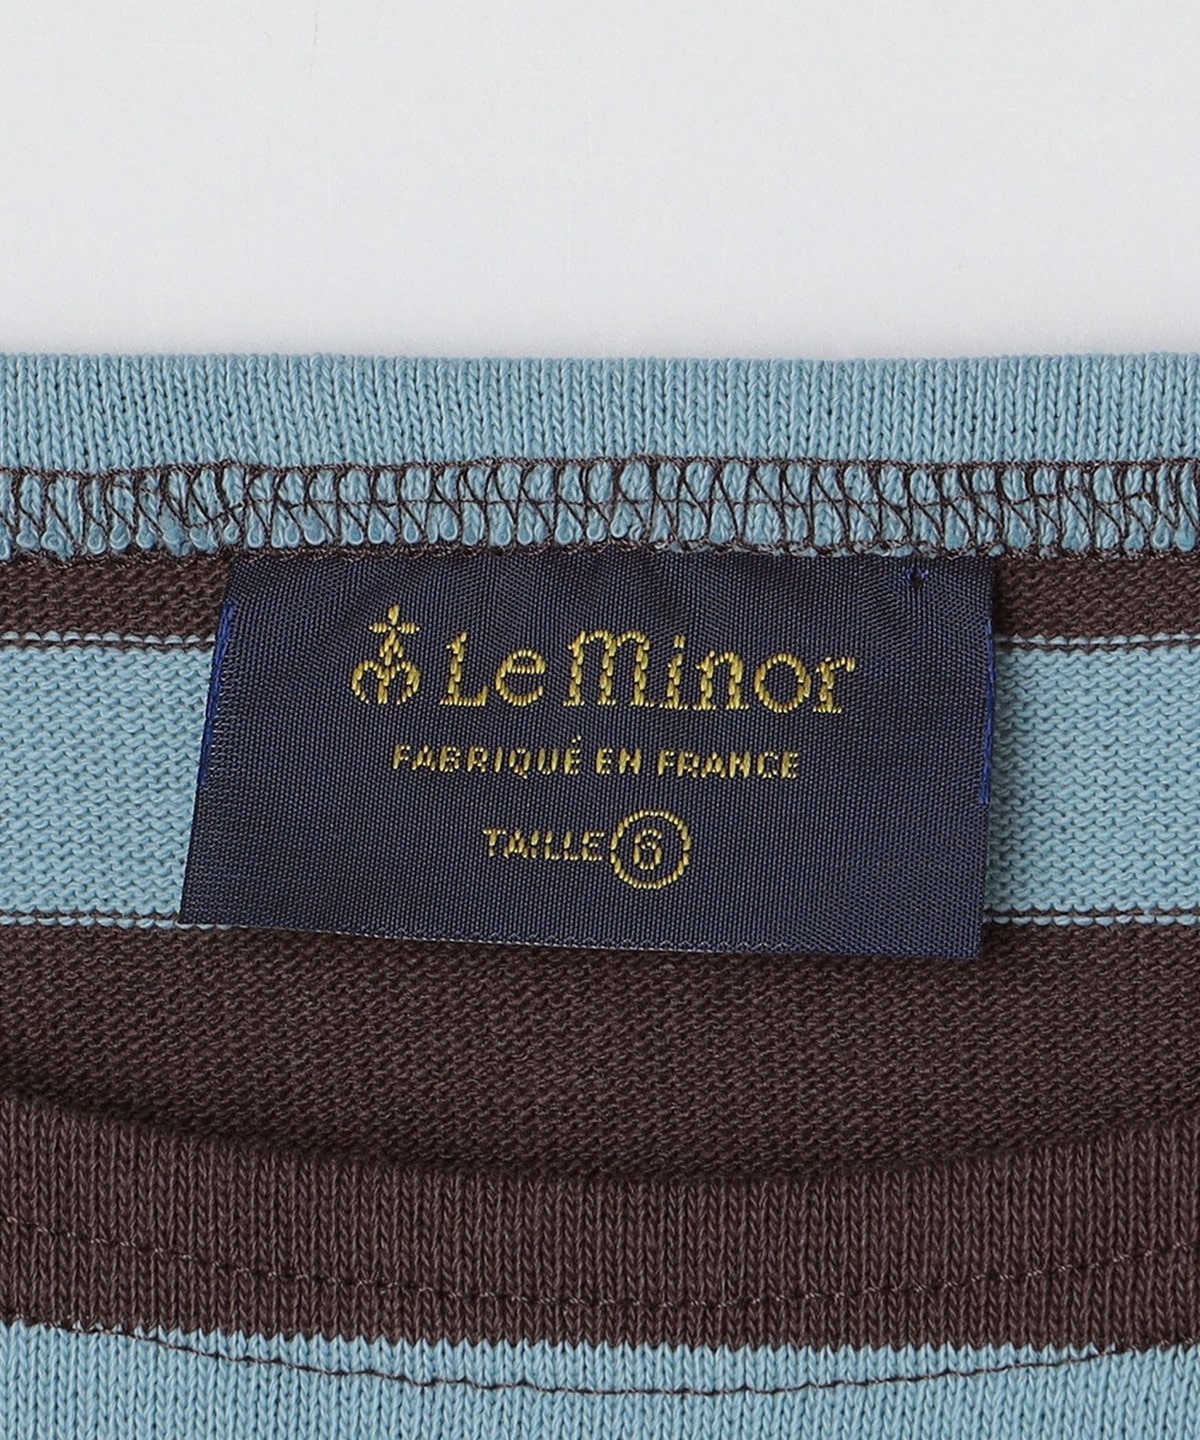 CAL O LINE: Le Minor S/S BRETON MARINE: Tシャツ/カットソー SHIPS